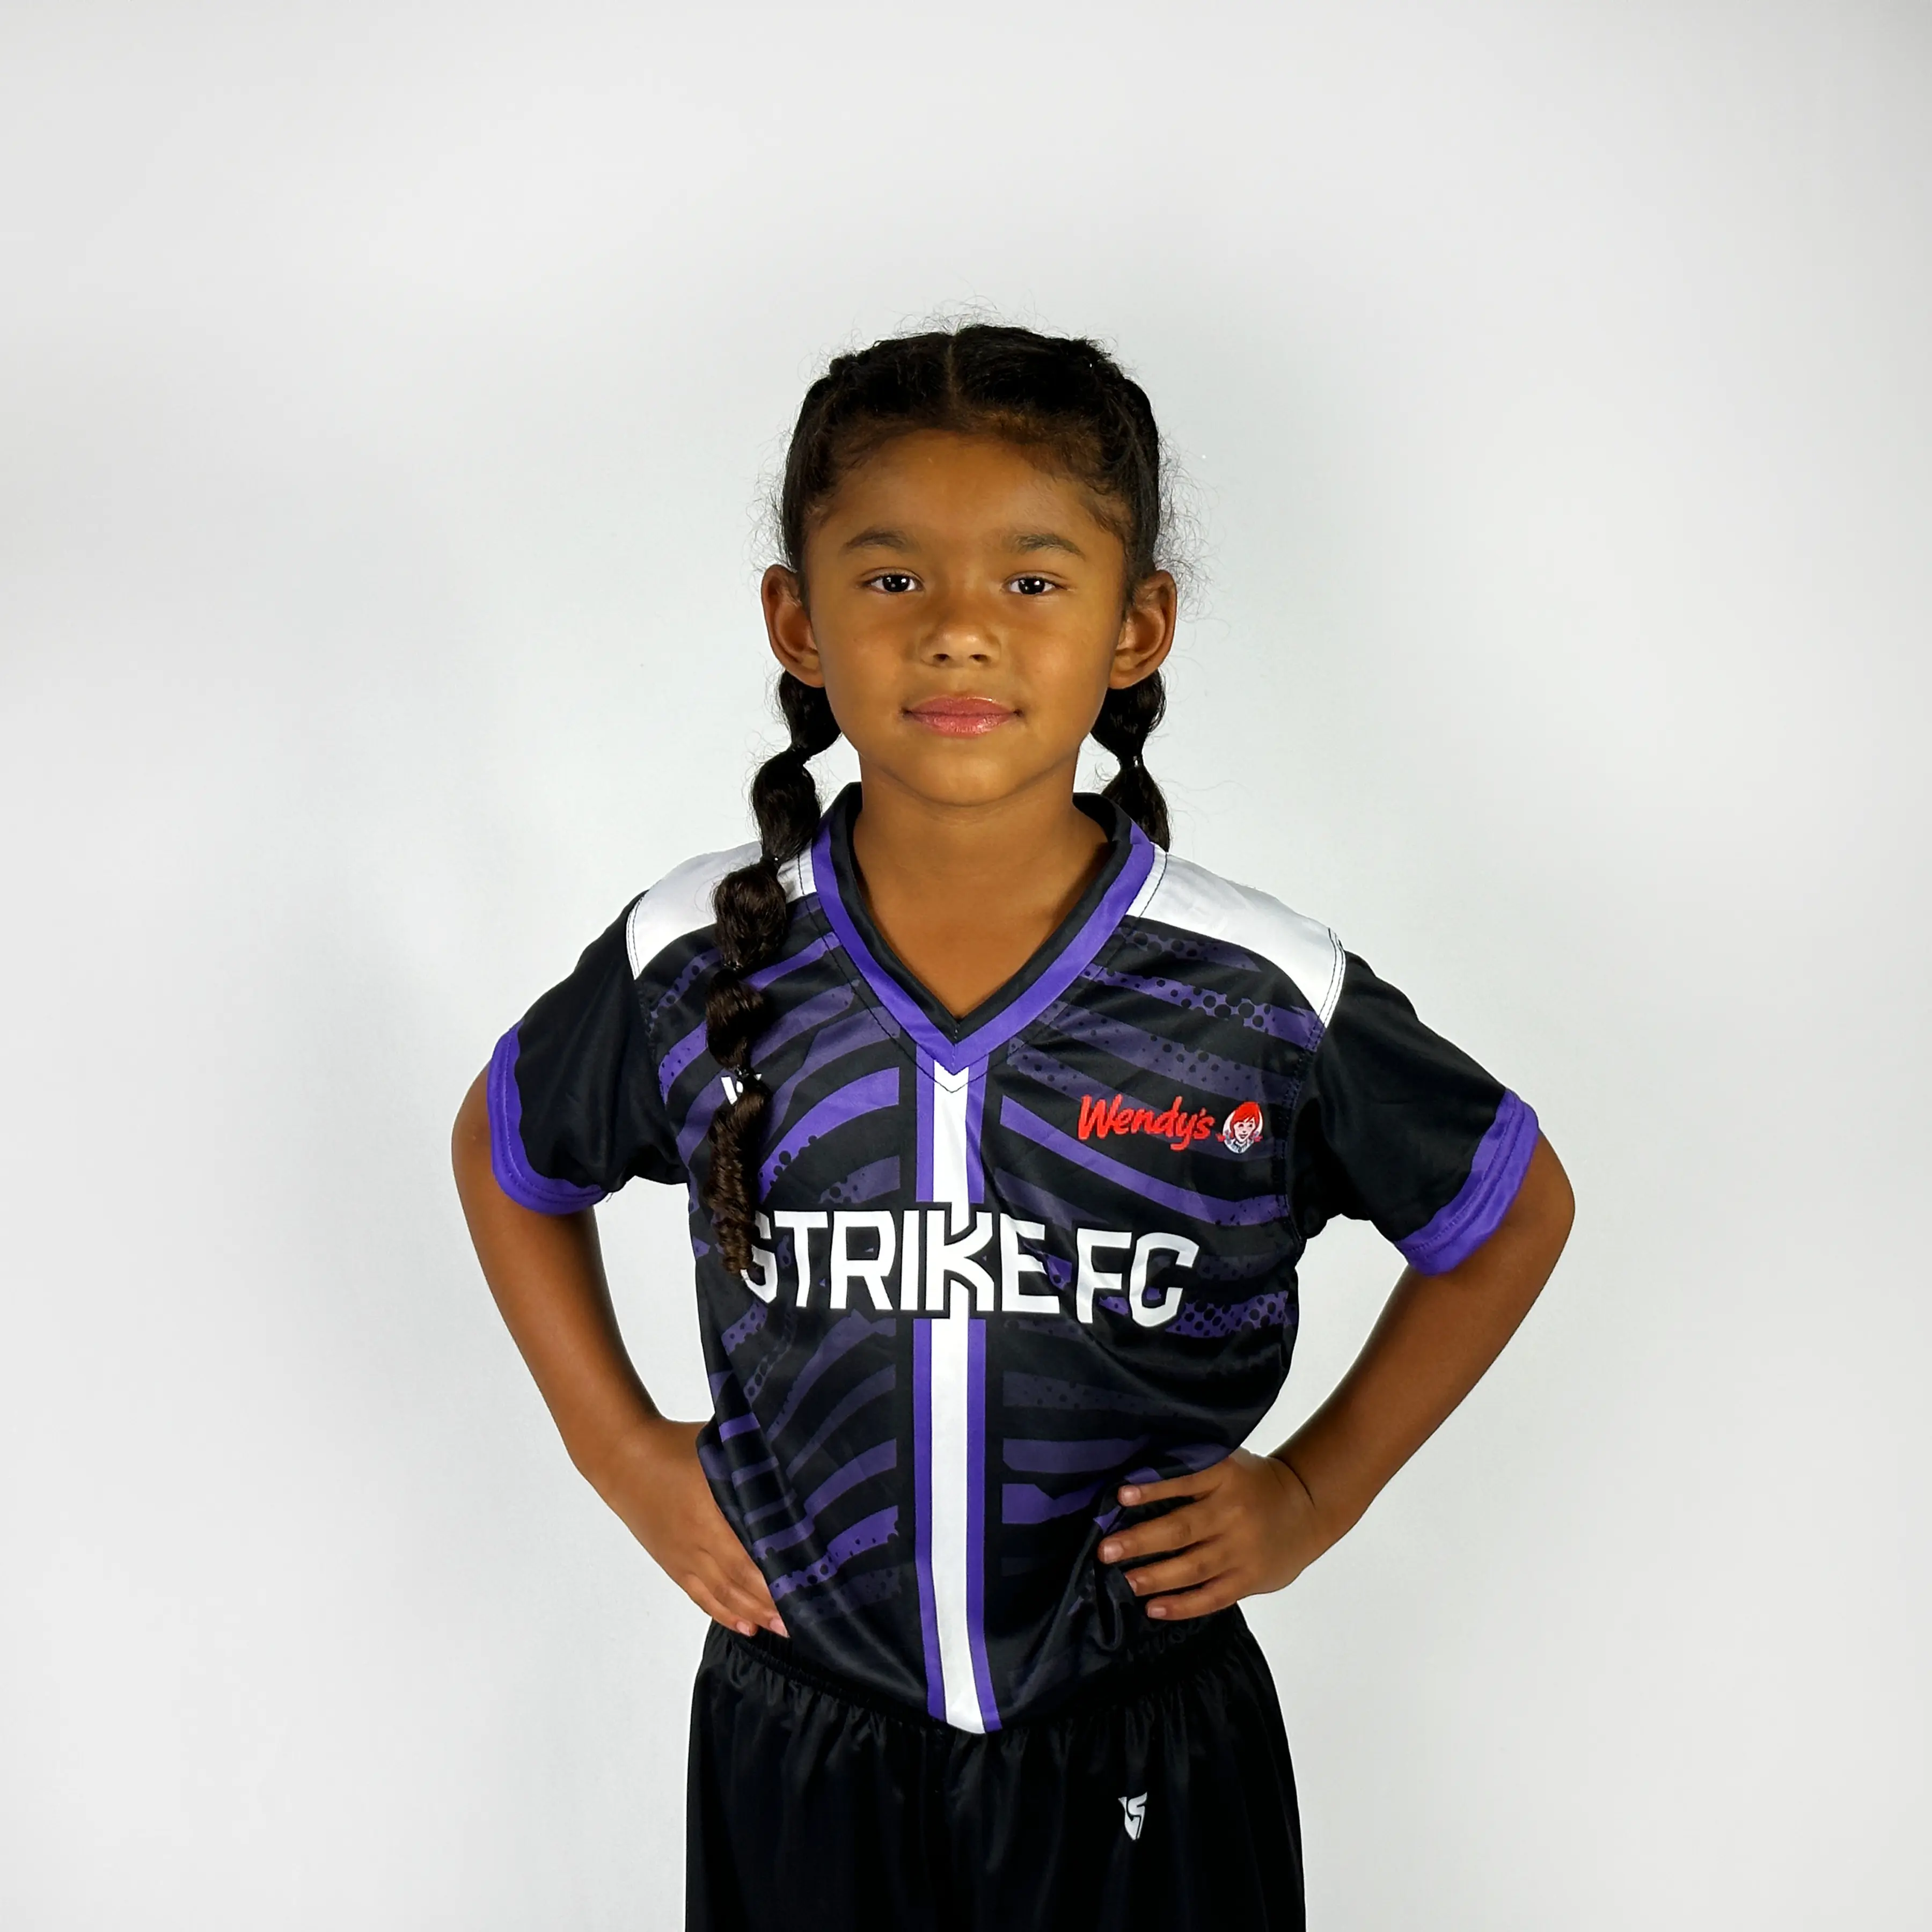 Strike FC Soccer Uniform